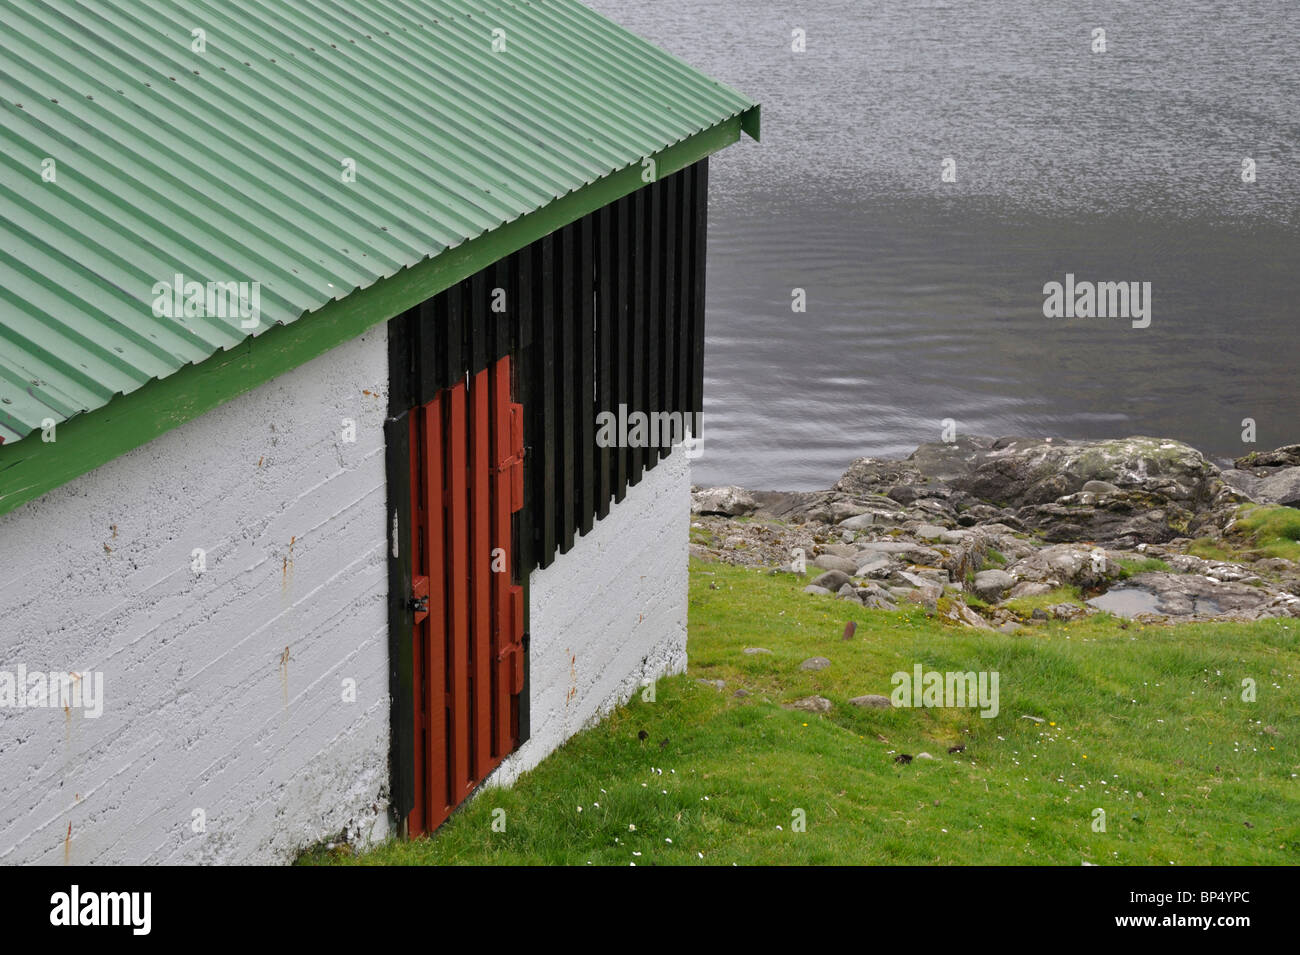 Red, white and green building, Norðtoftir, Borðoy, Faroe Islands Stock Photo